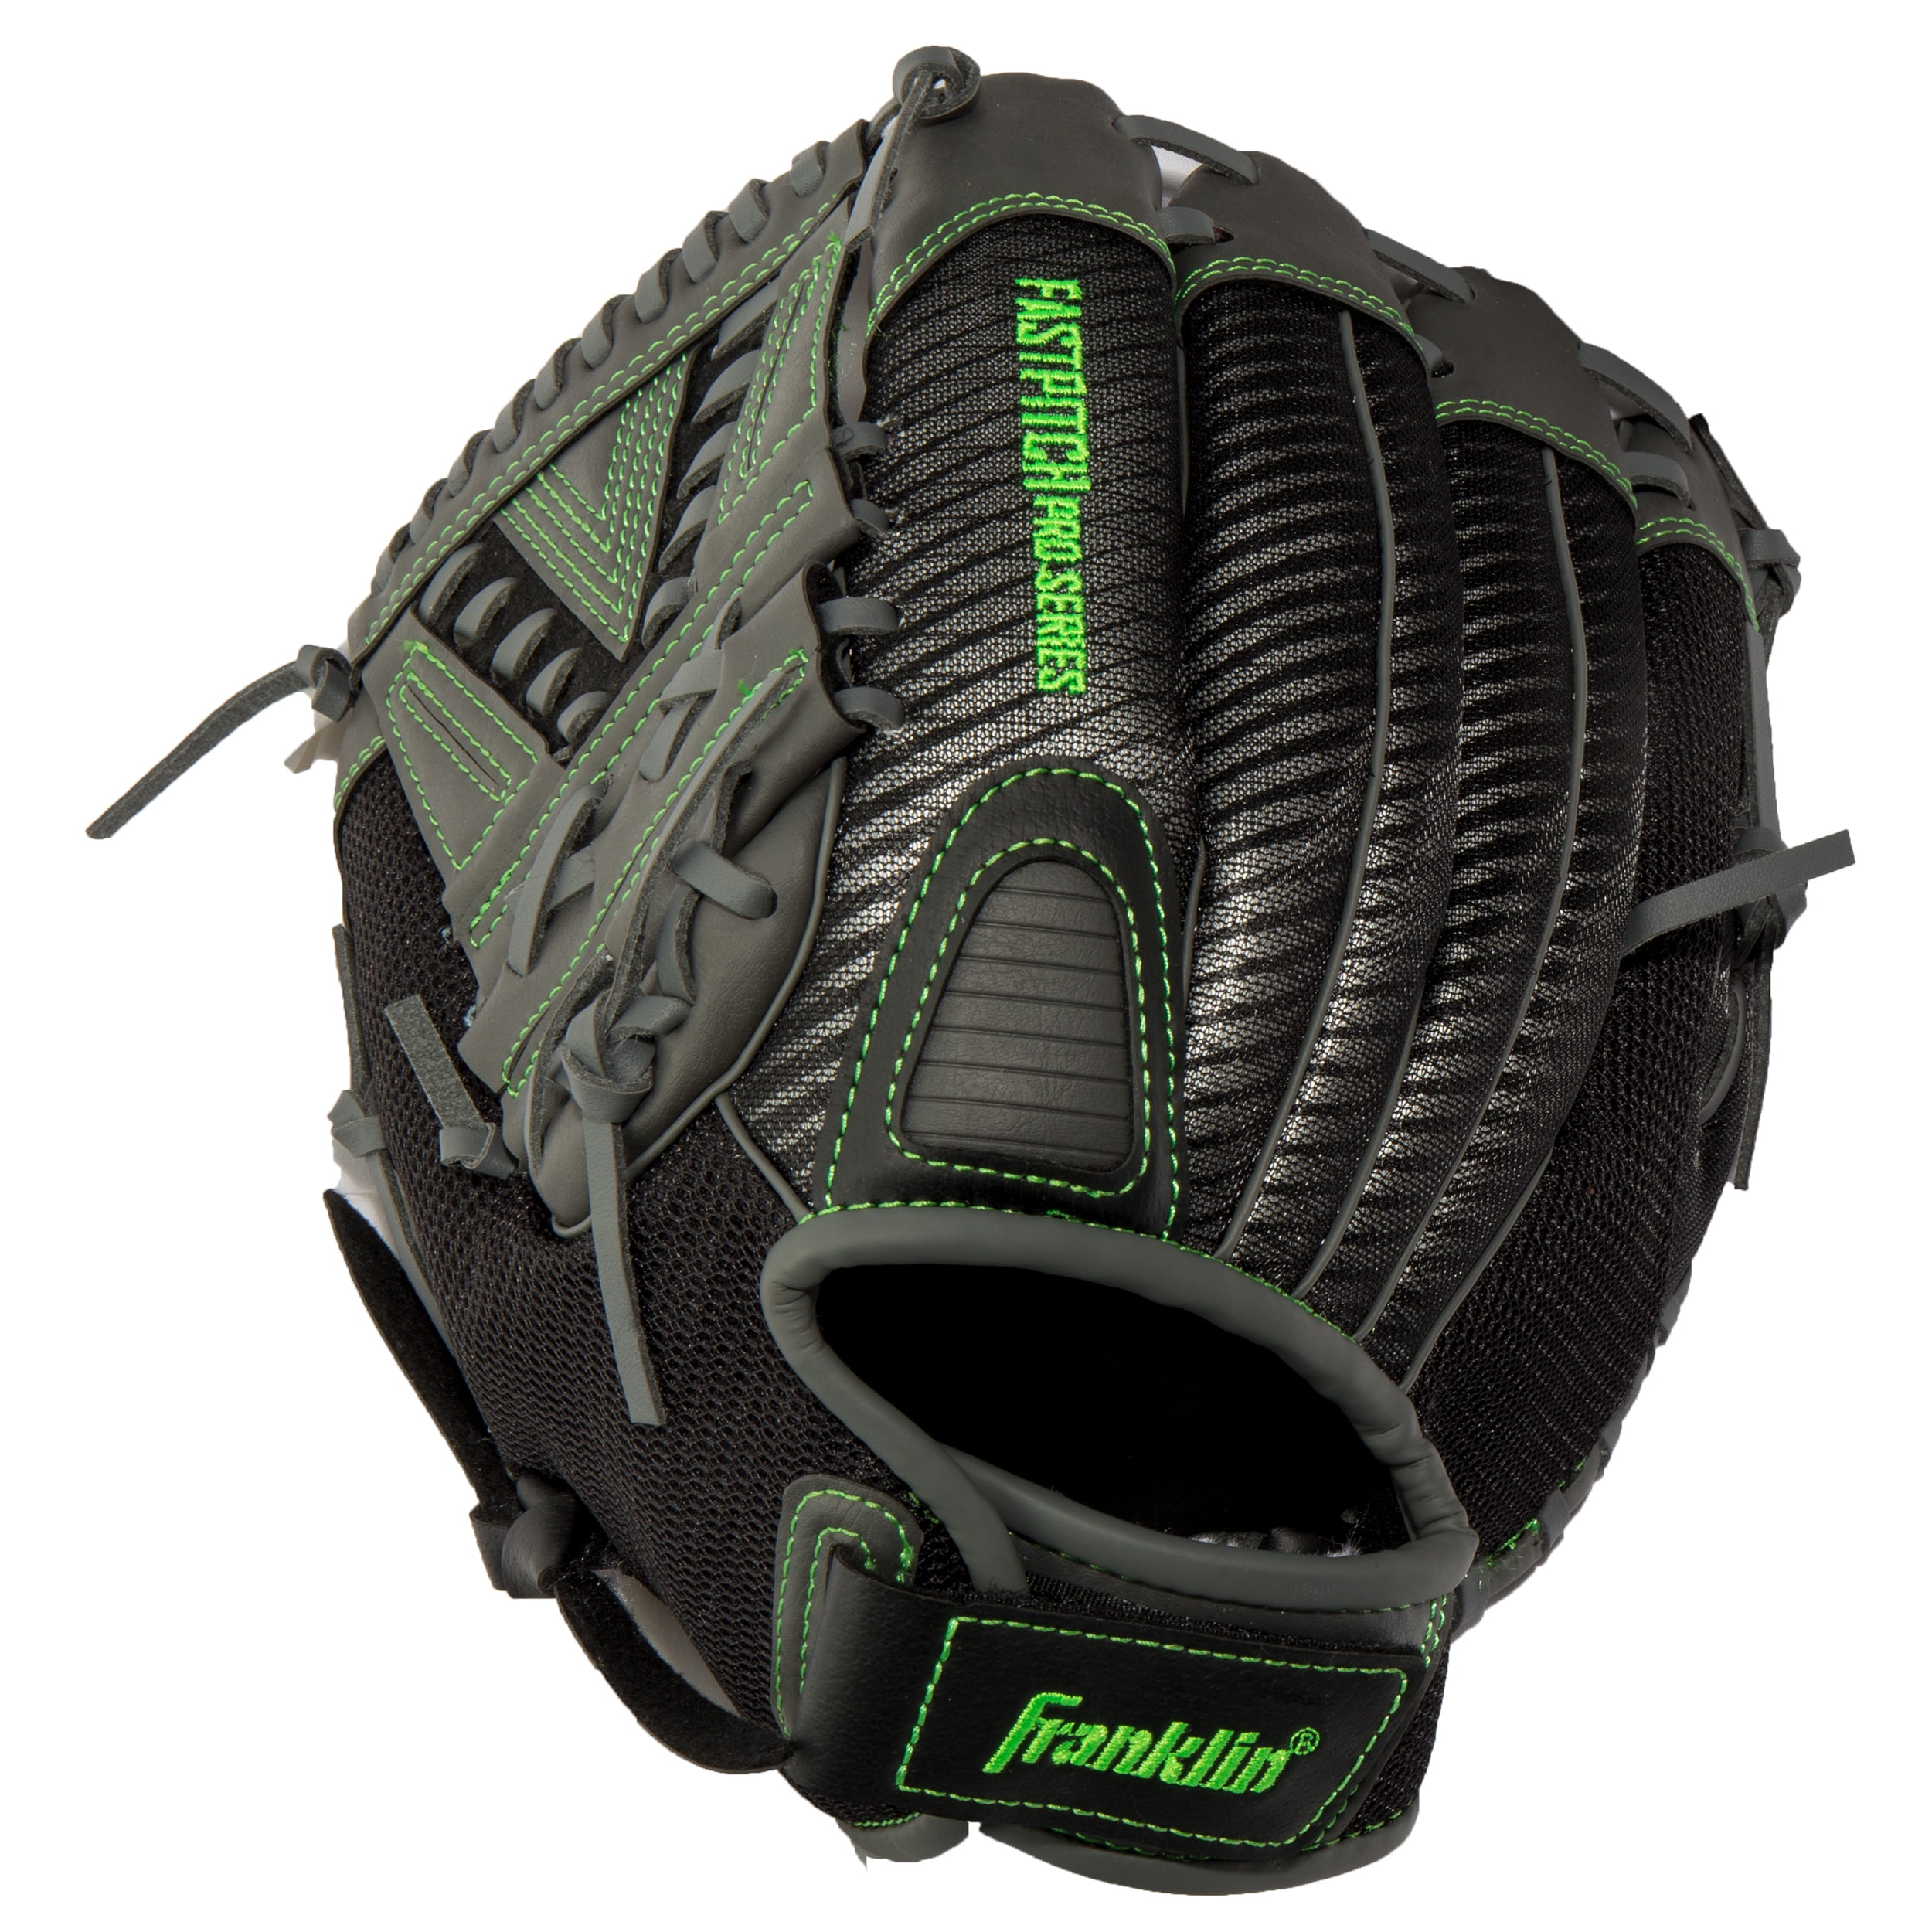 Rawlings Pro Select Series 12.5" Baseball Glove Black/Gray 